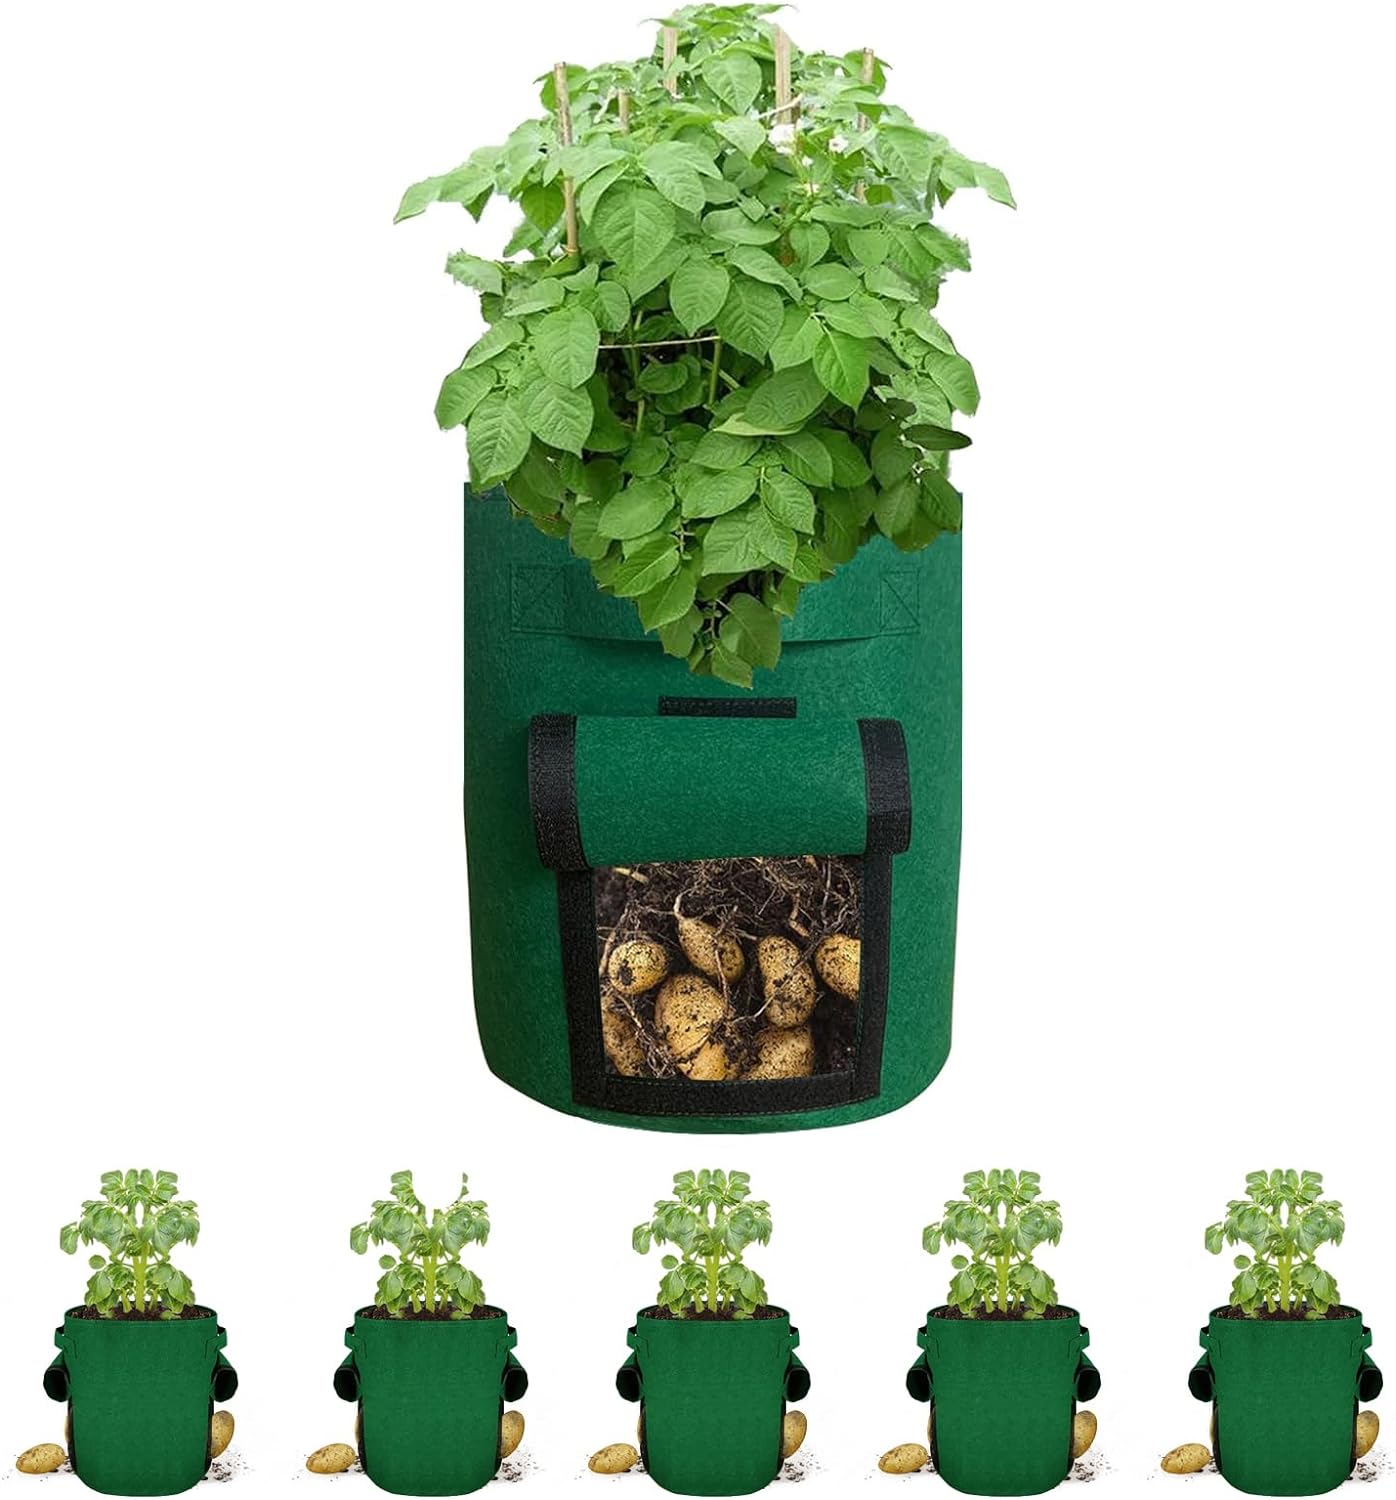 Potato Grow Bags, Aeration Fabric Pots 5-Pack 10 Gallon